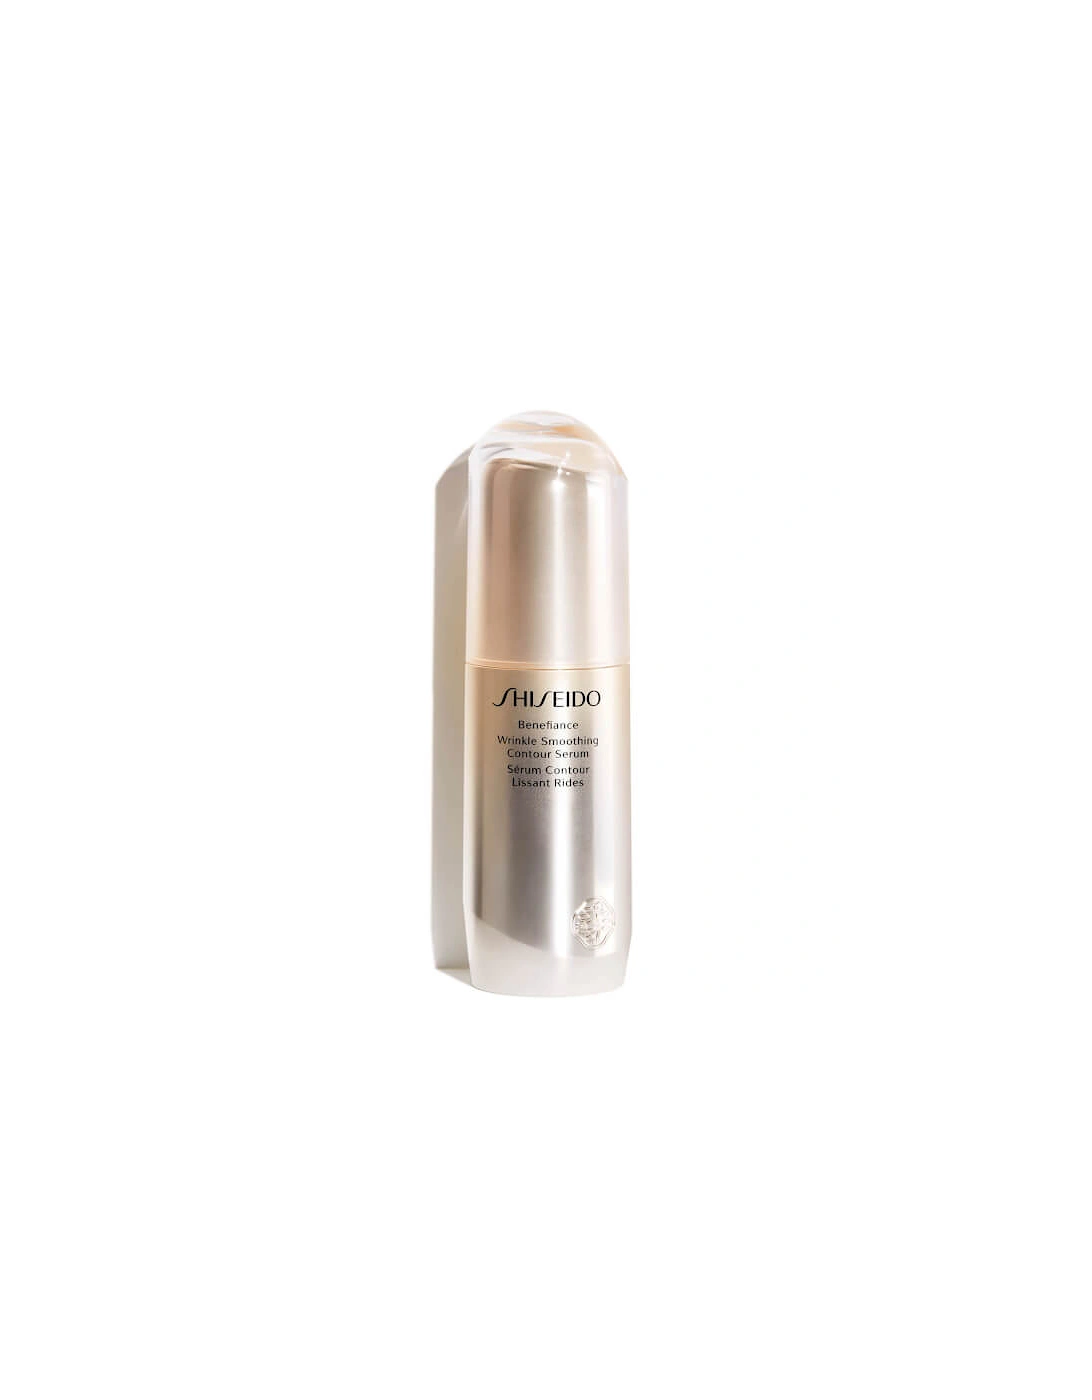 Benefiance Wrinkle Smoothing Contour Serum 30ml - Shiseido, 2 of 1